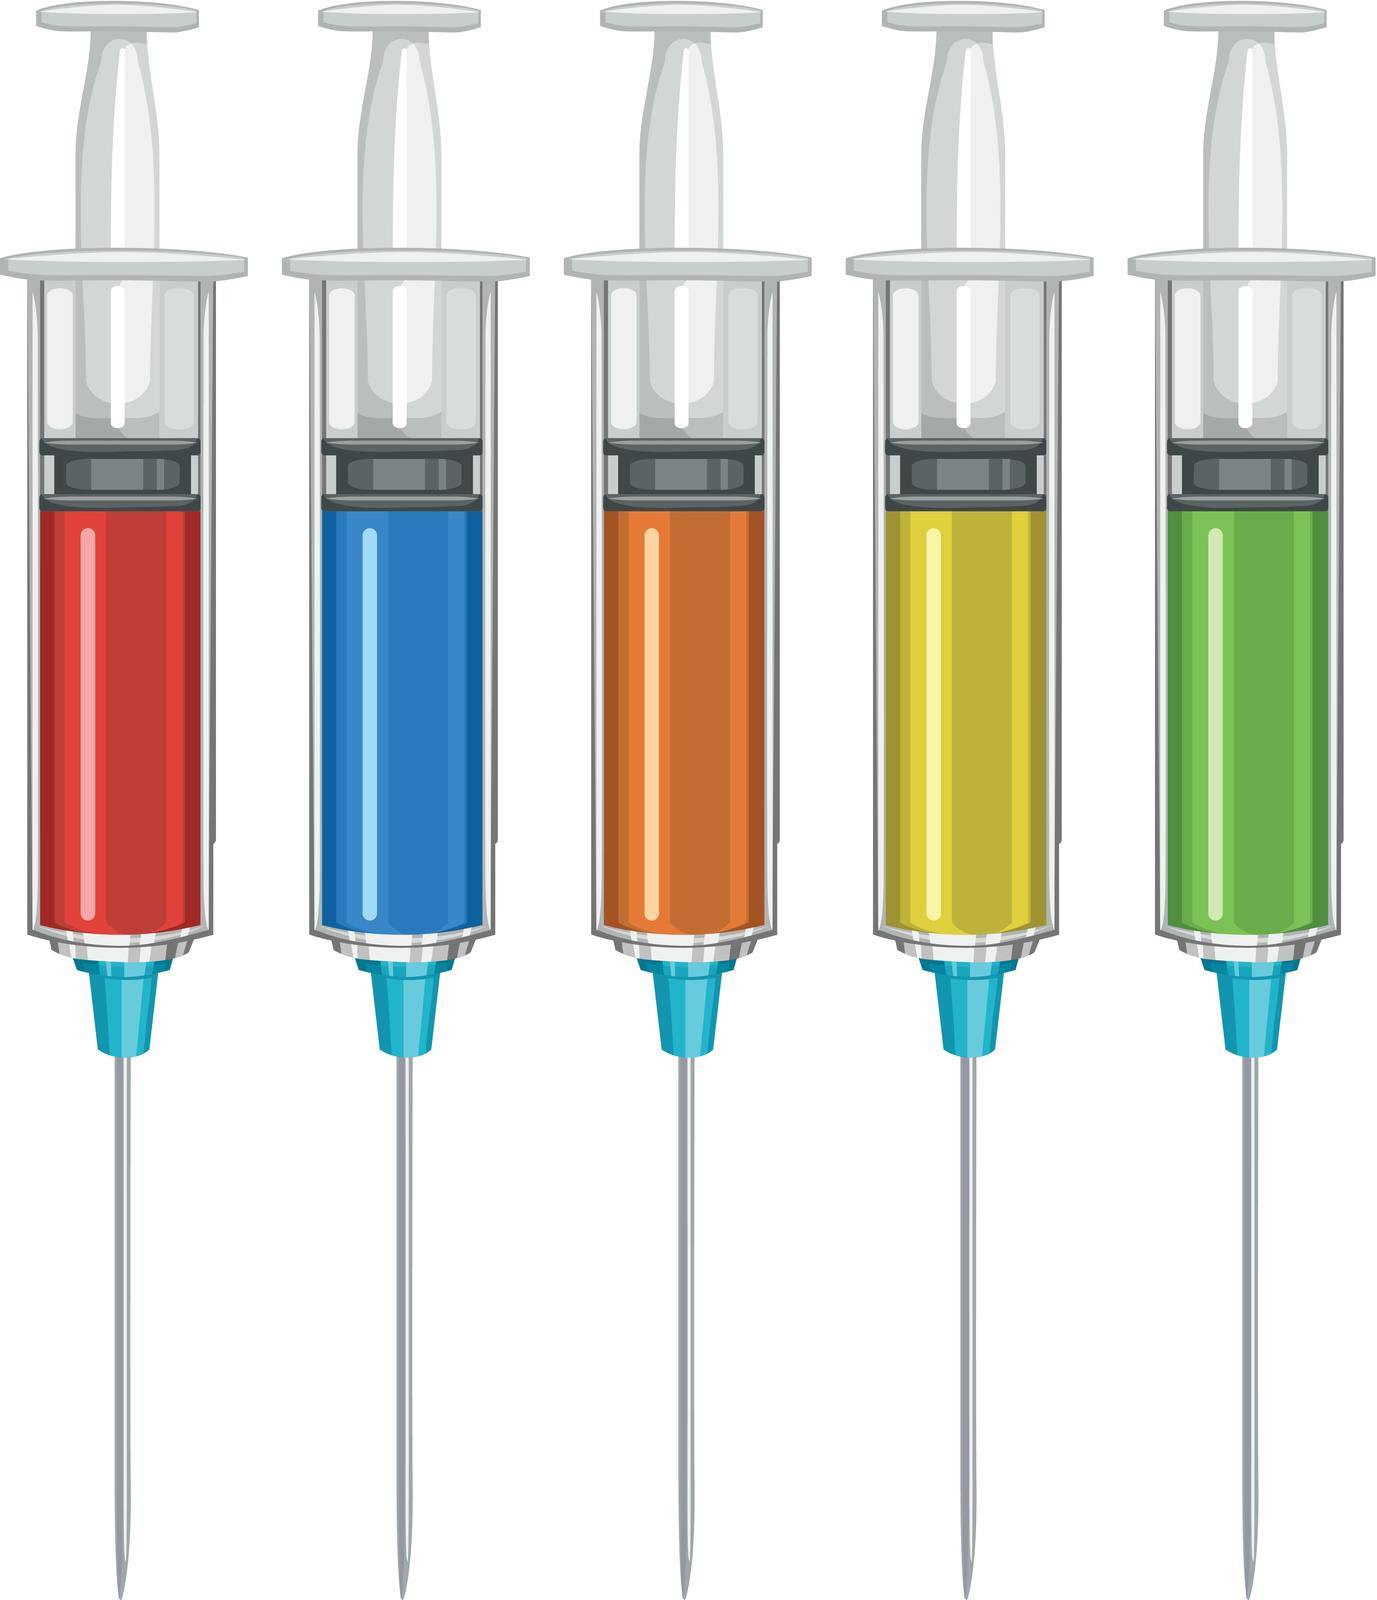 Syringe with liquid medicine inside illustration